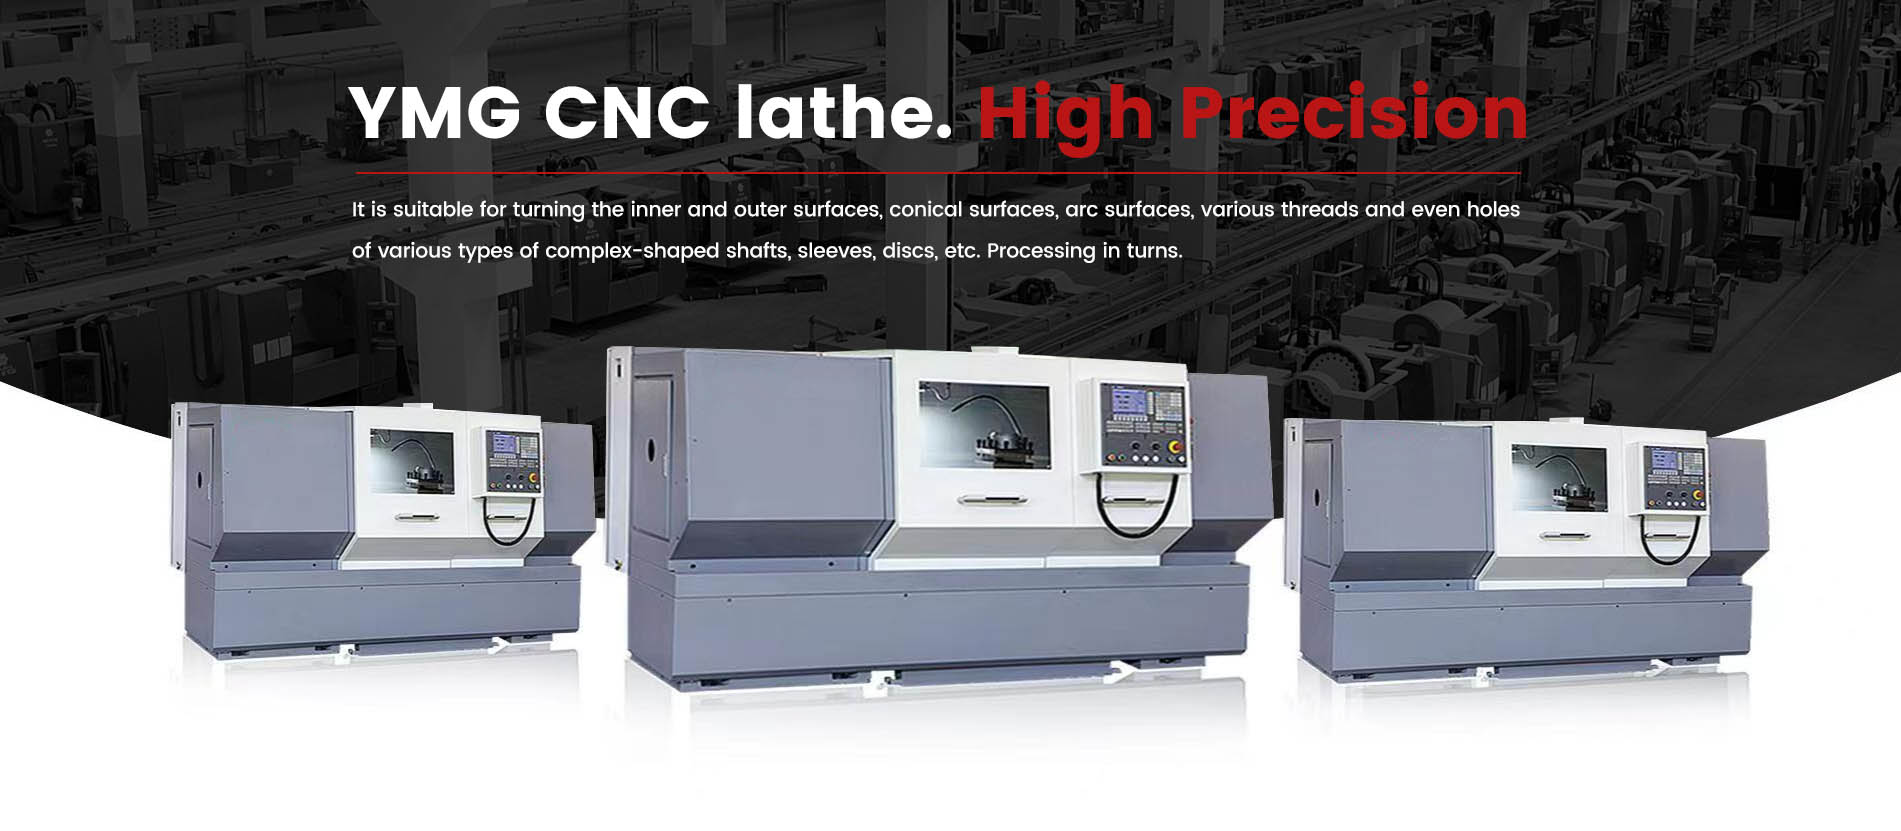 YMG CNC lathe